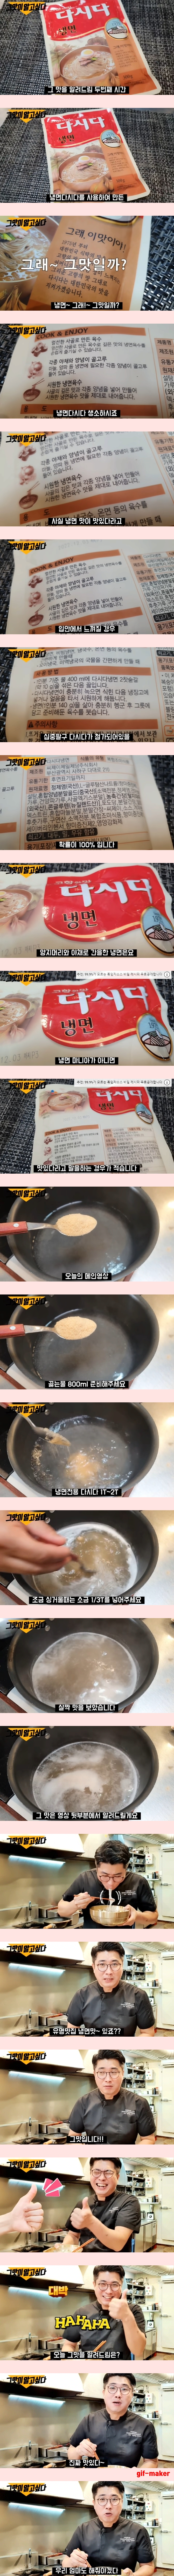 image.png 냉면 맛집의 비밀